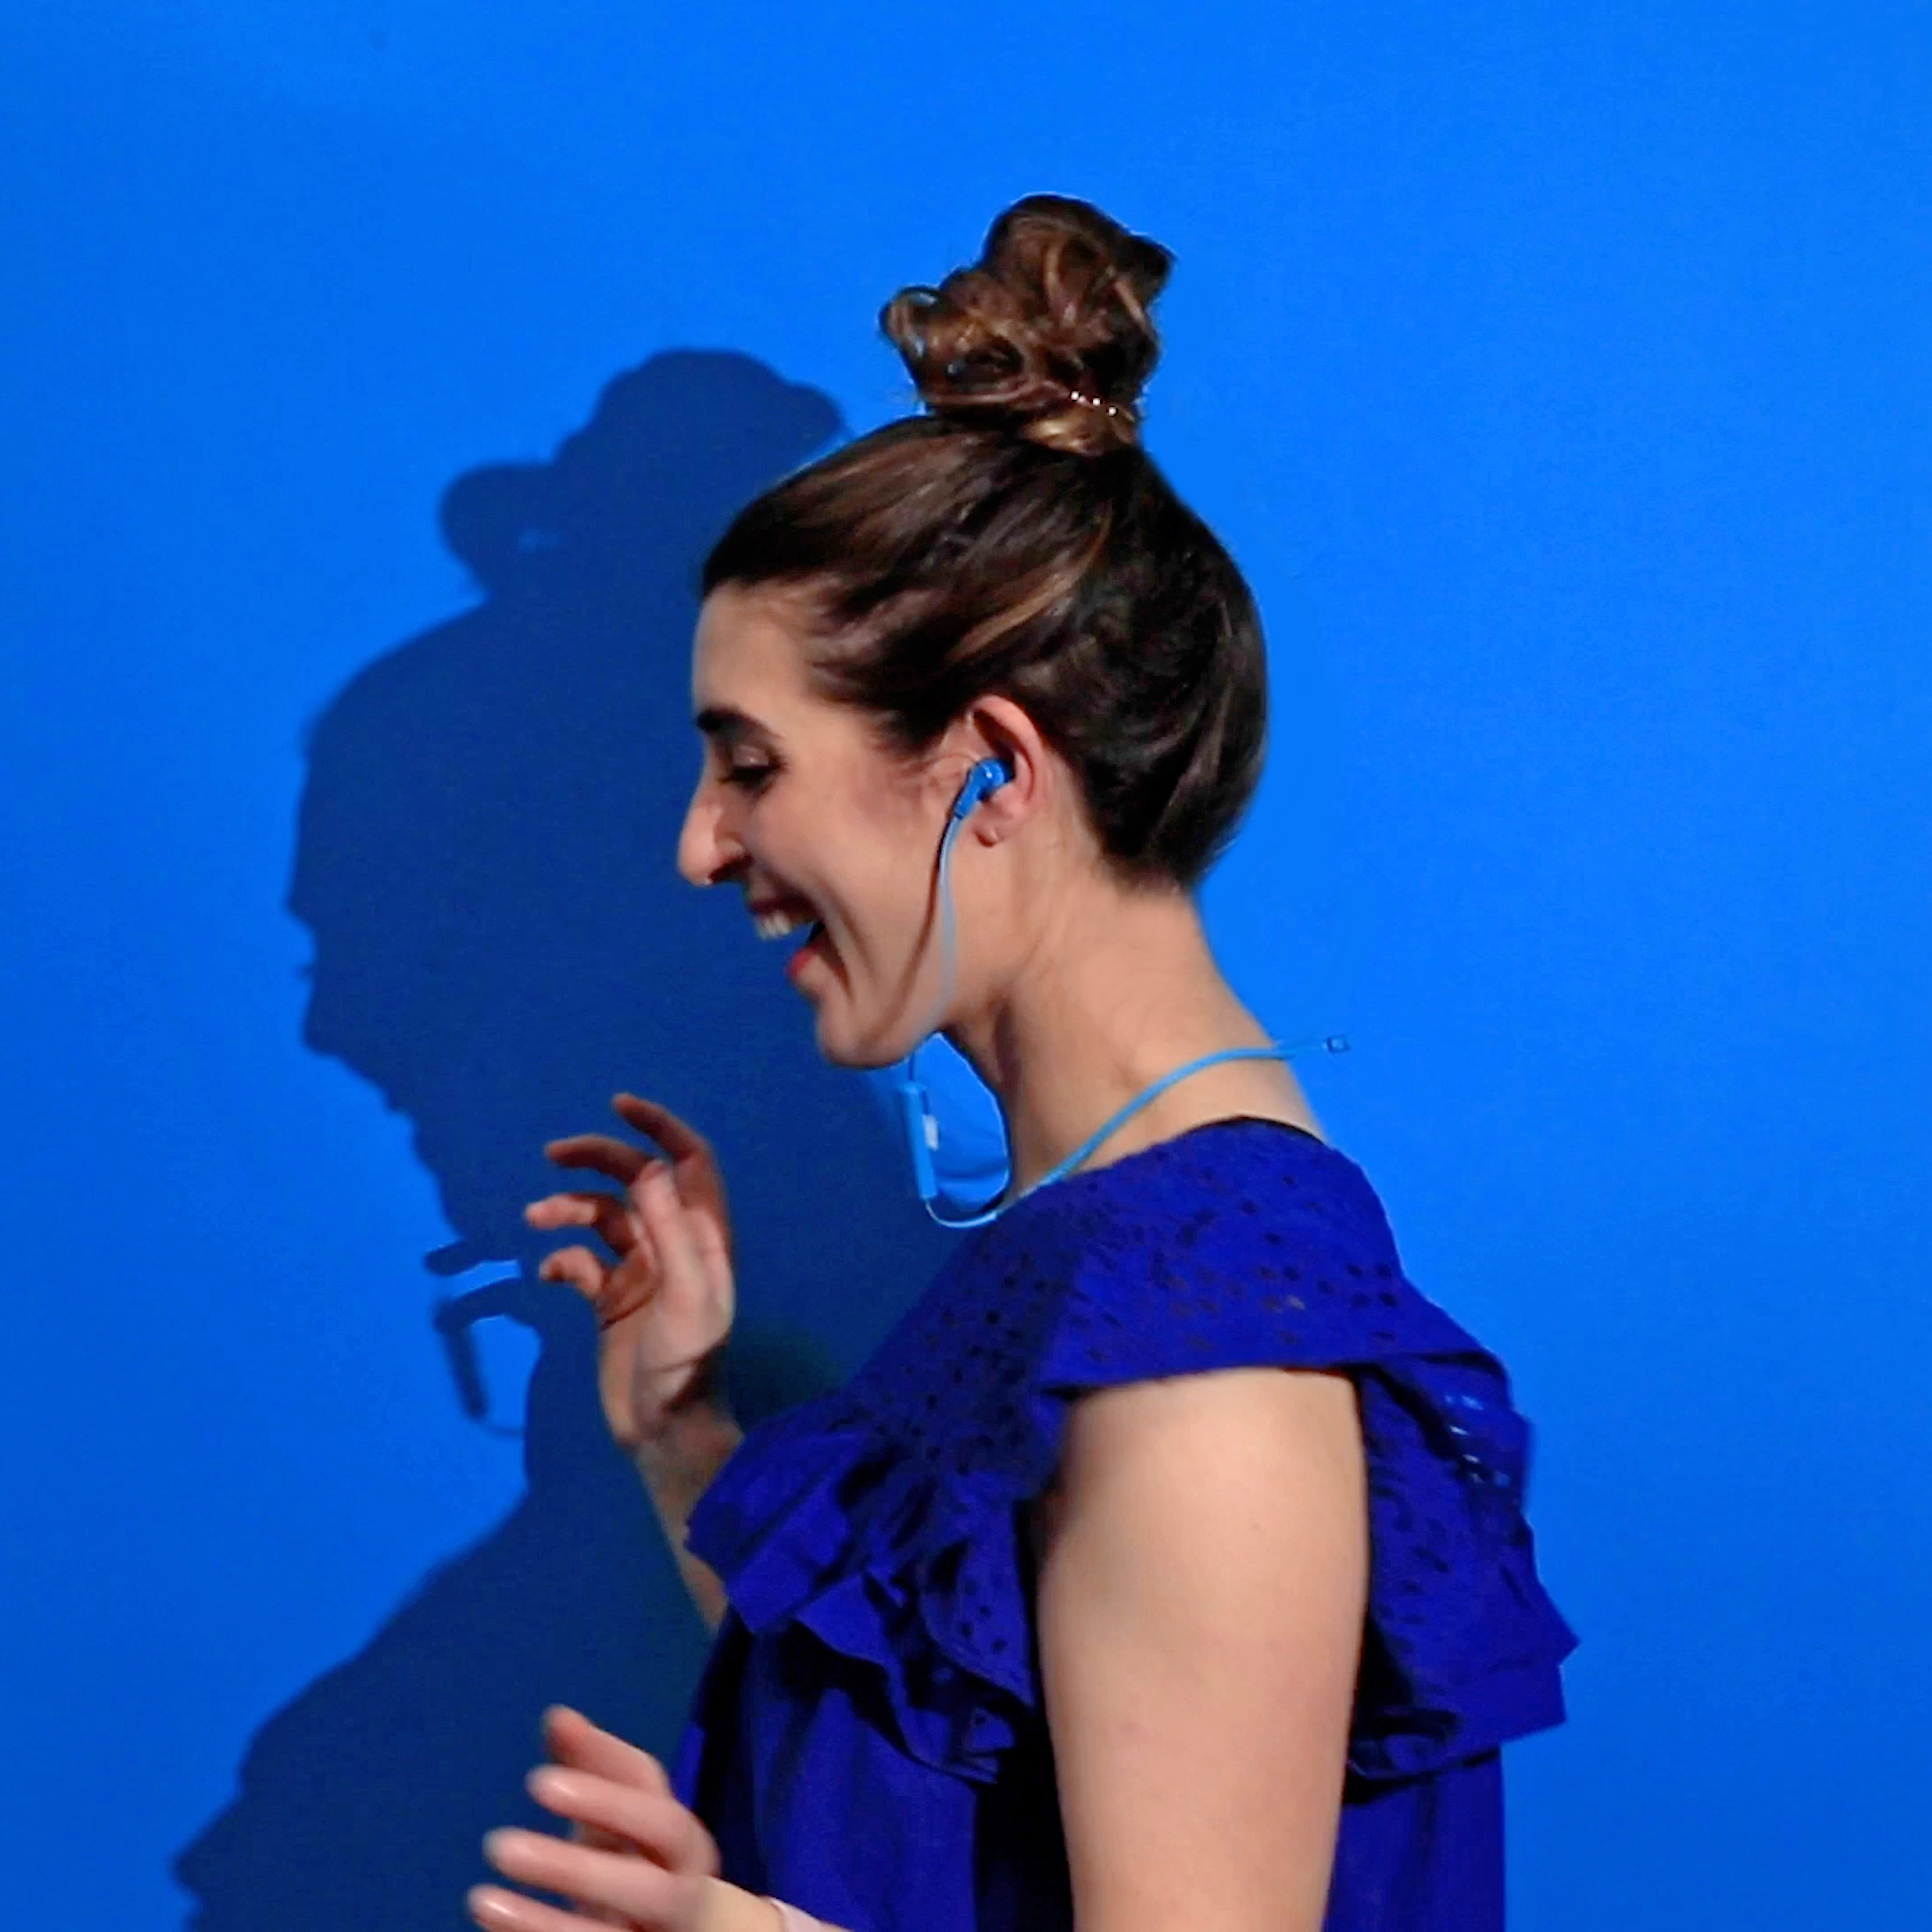 Woman wearing Sharper image blue headphones